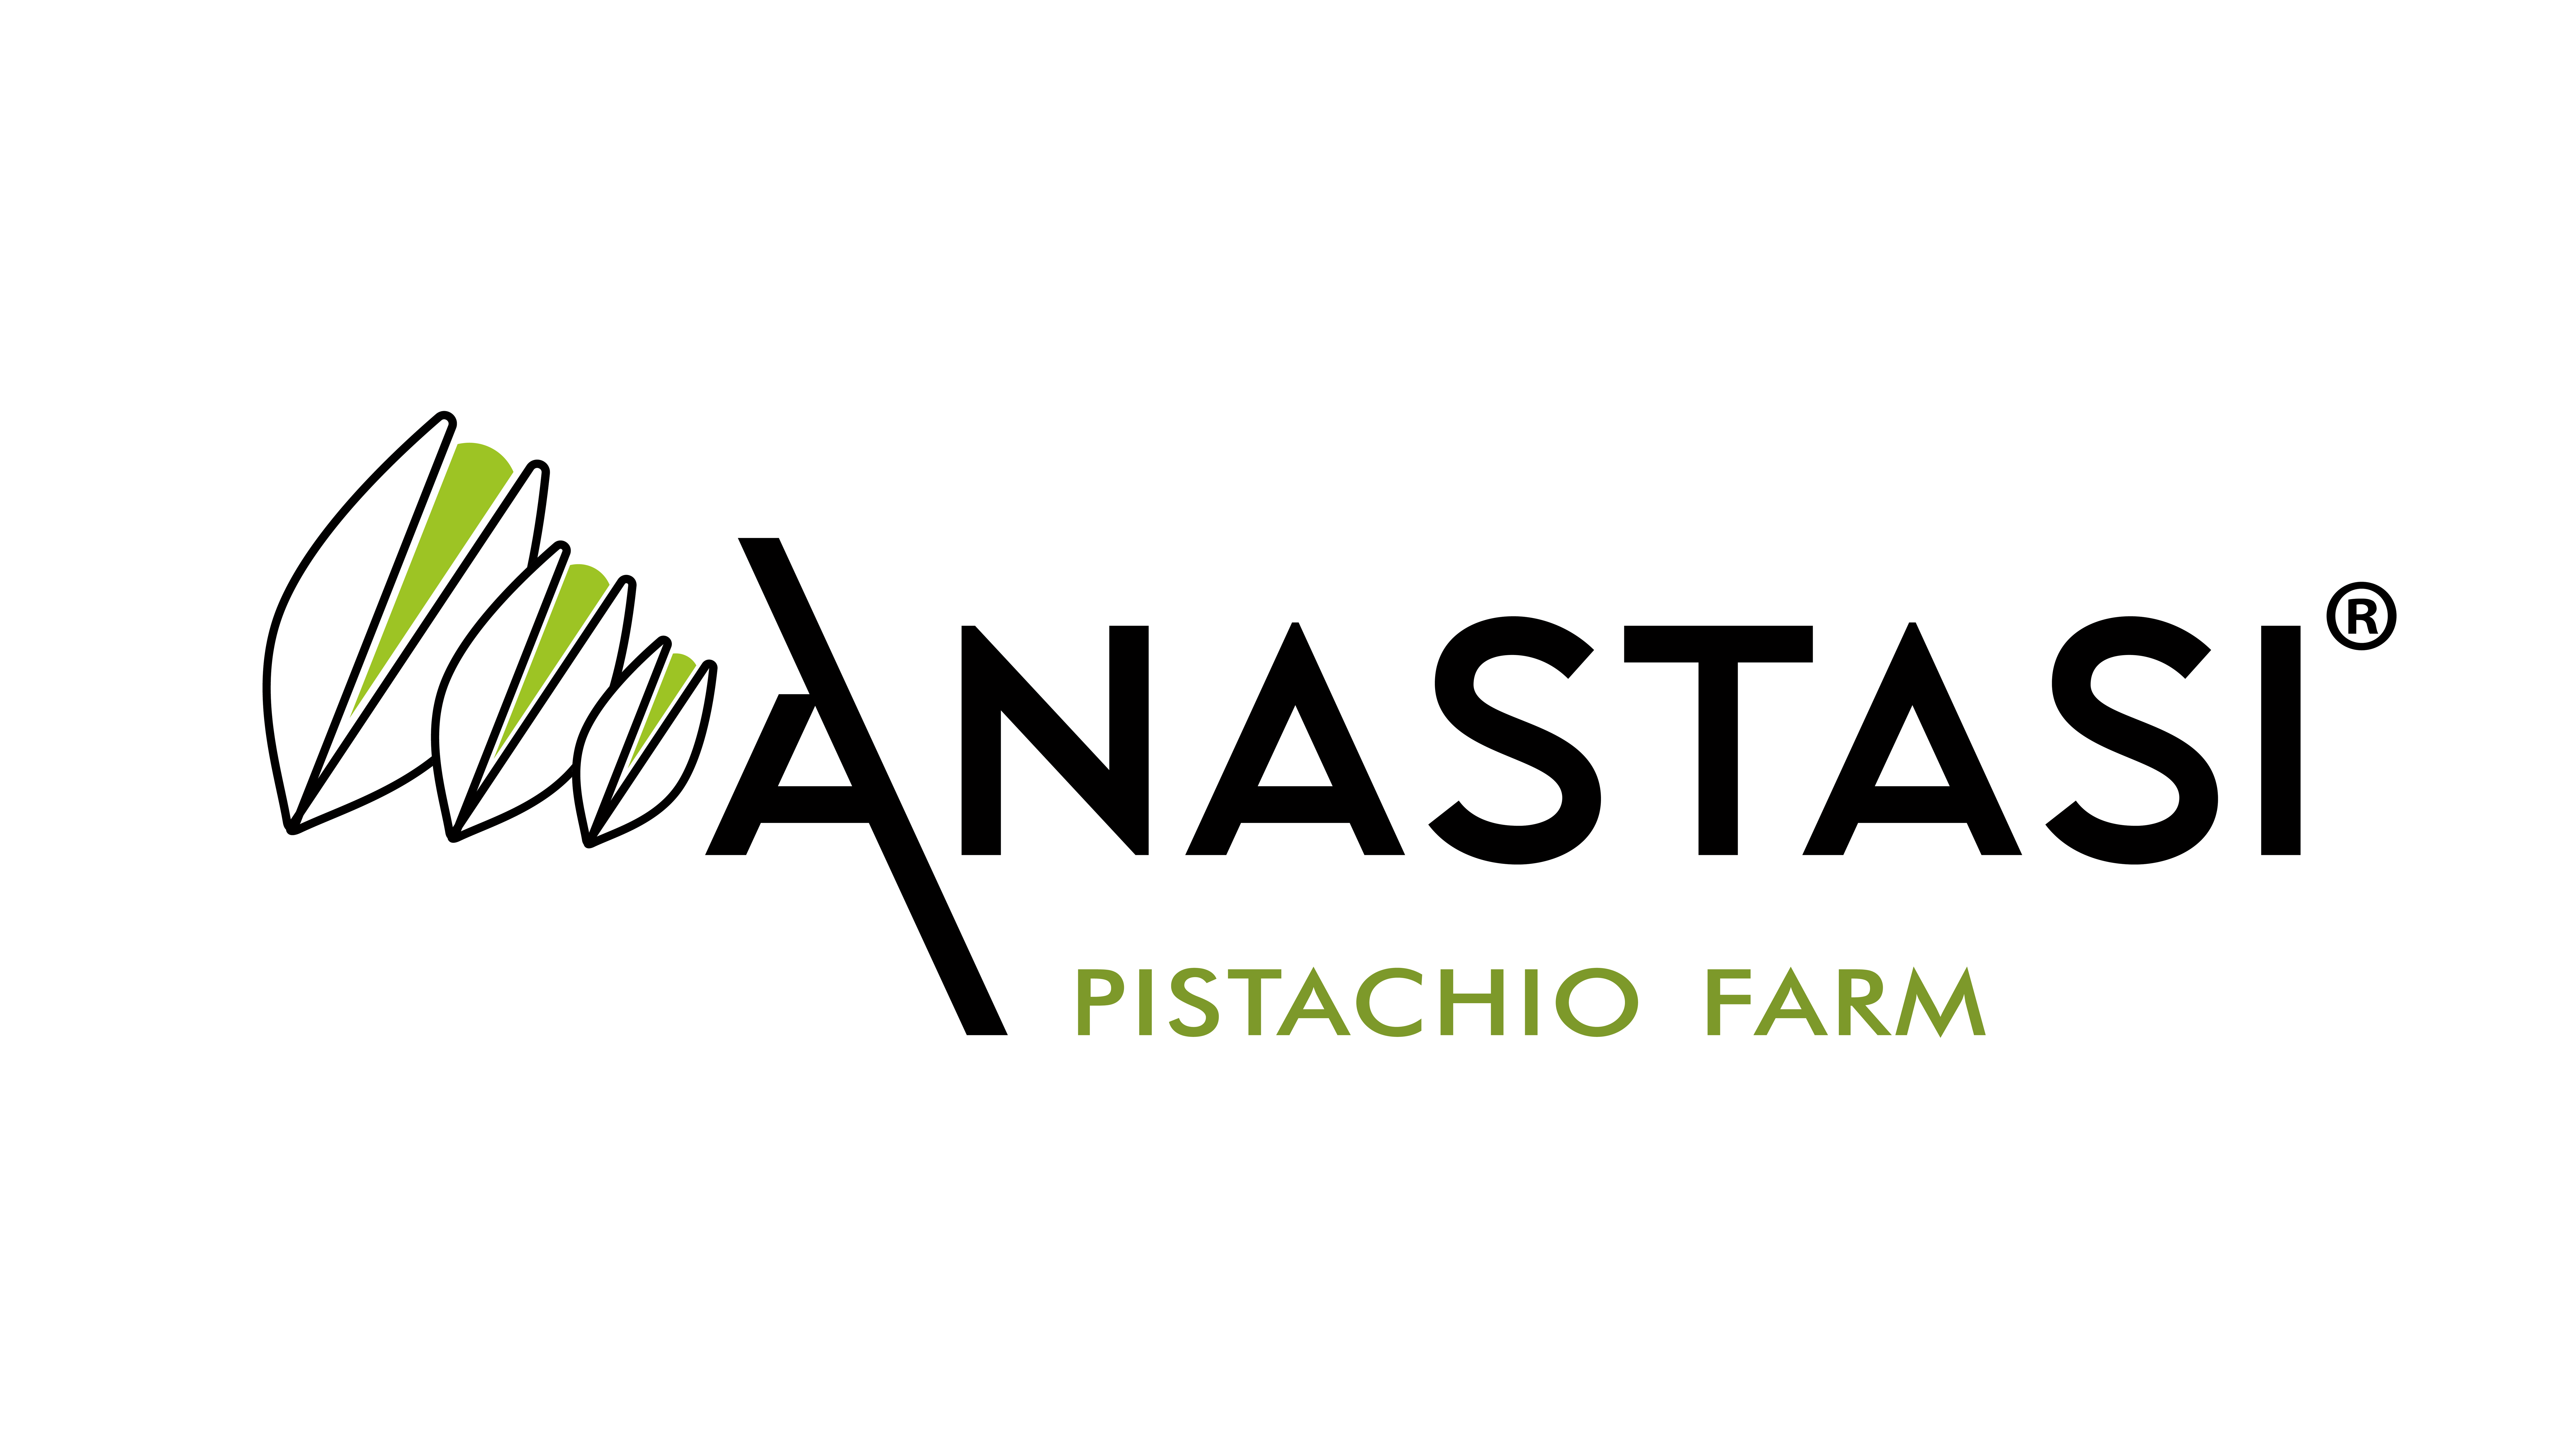 Pistachio Farm